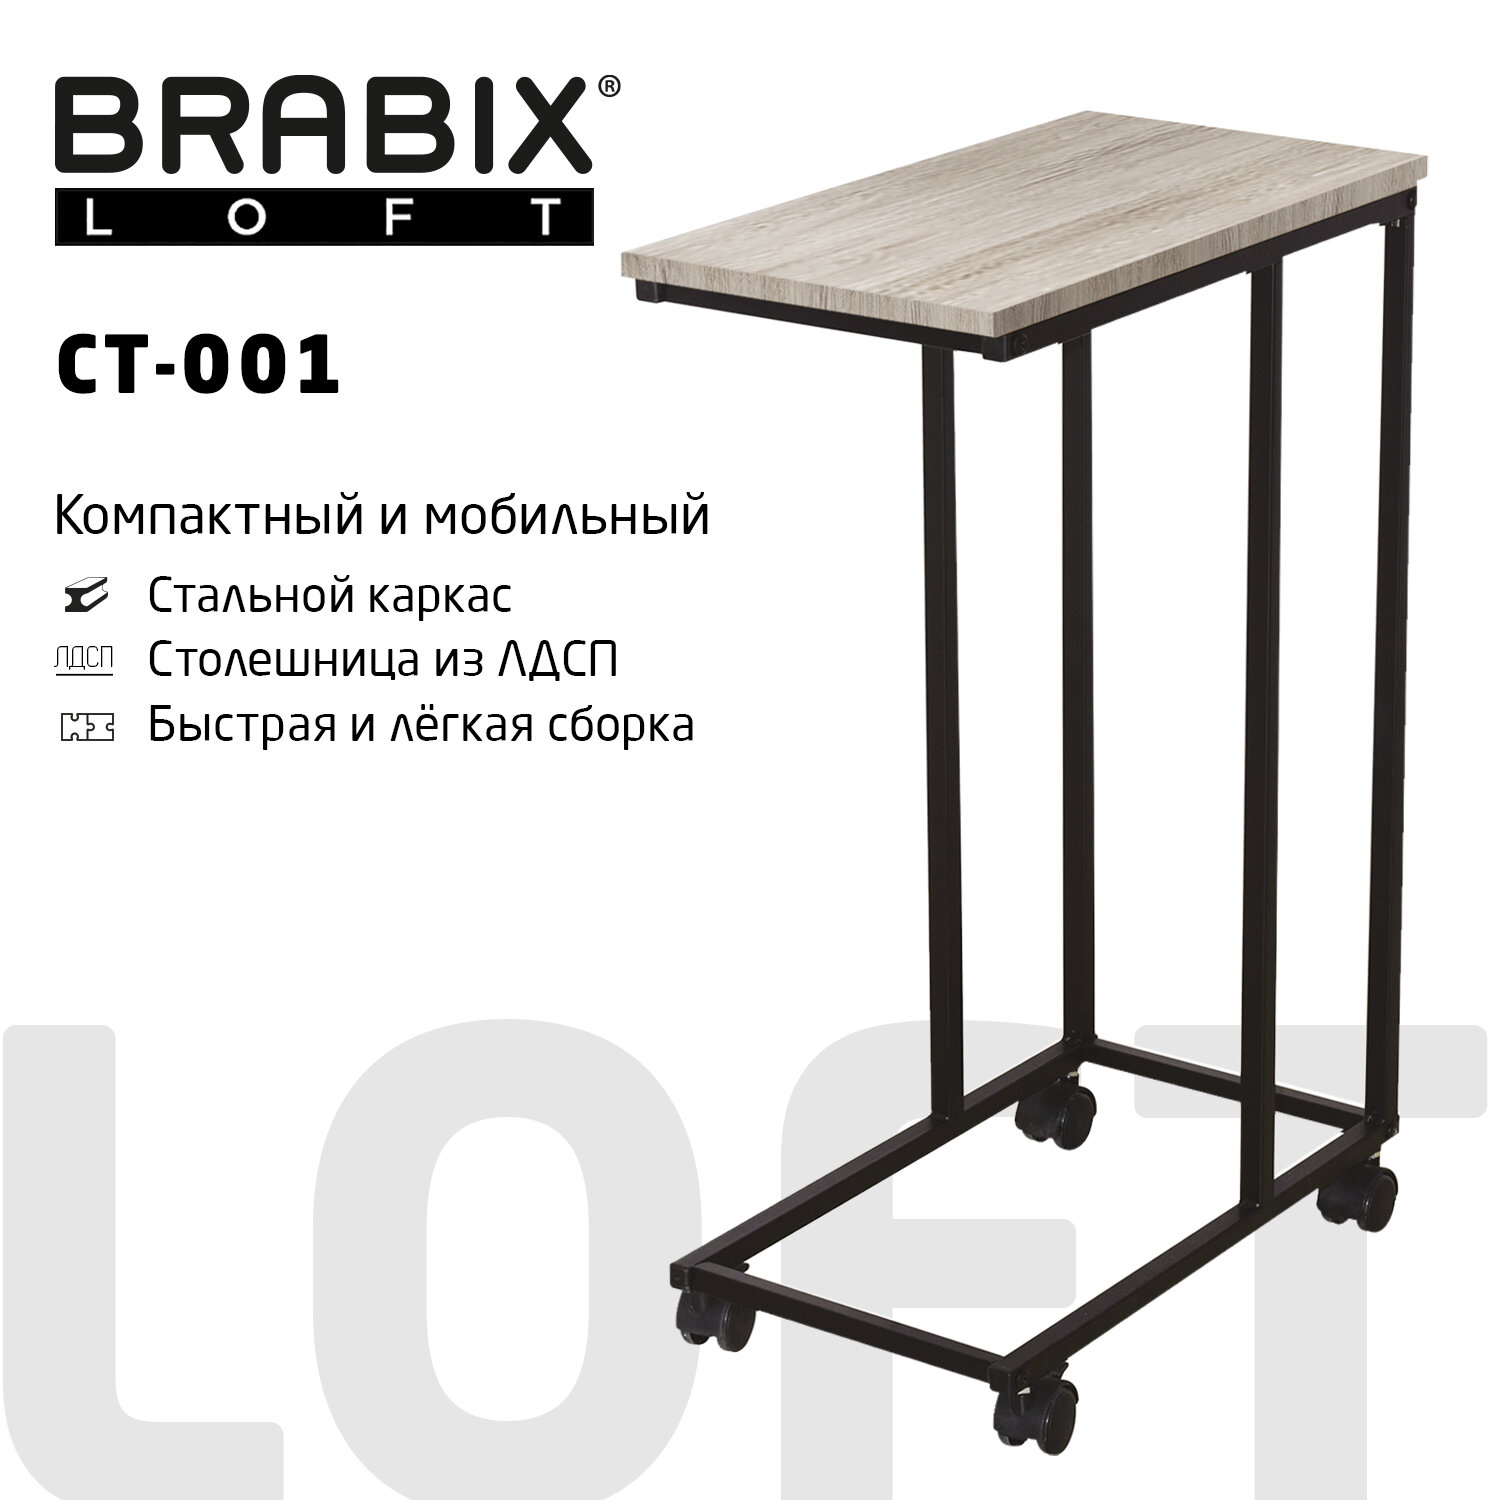 Brabix  BRABIX LOFT CT-001 641860